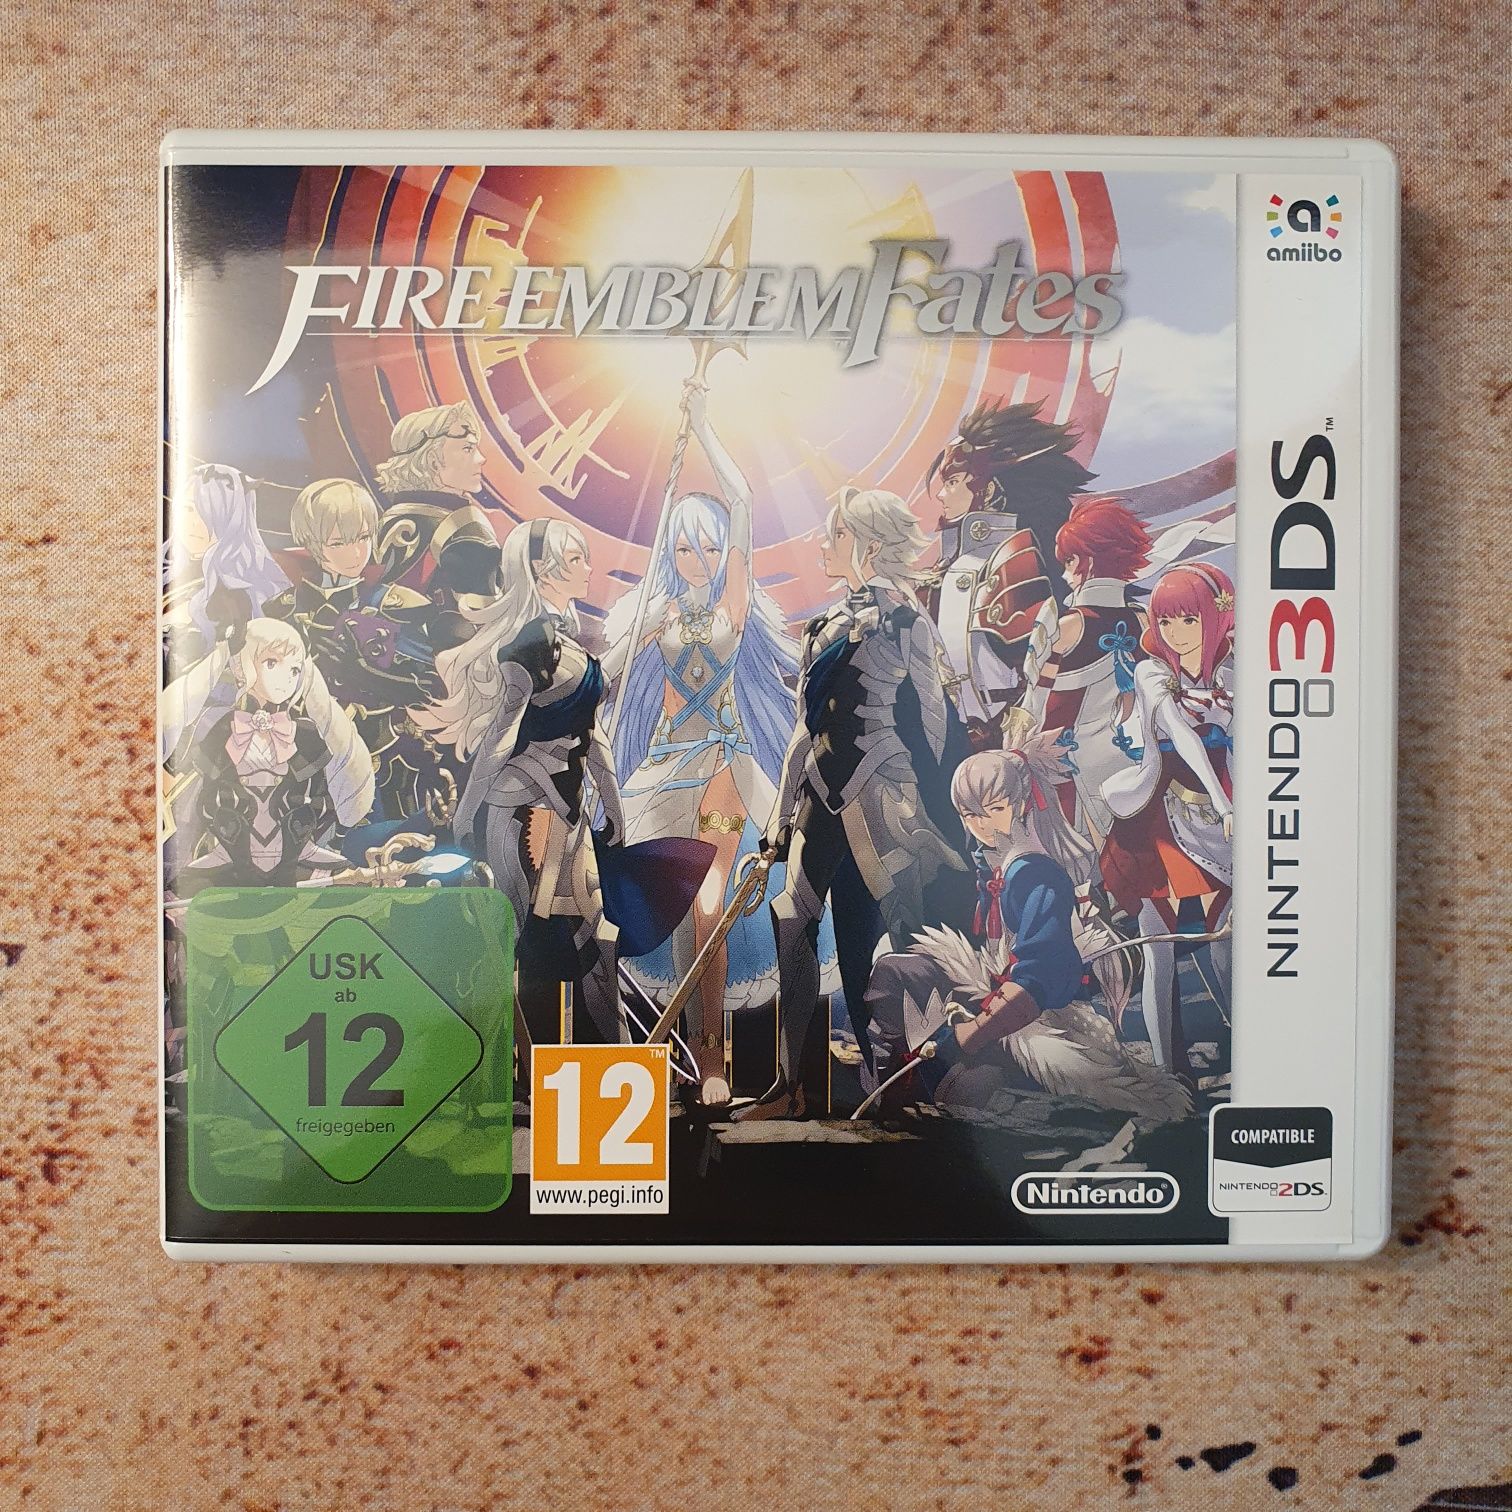 Nintendo 3DS - Fire Emblem Fates - Limited Edition